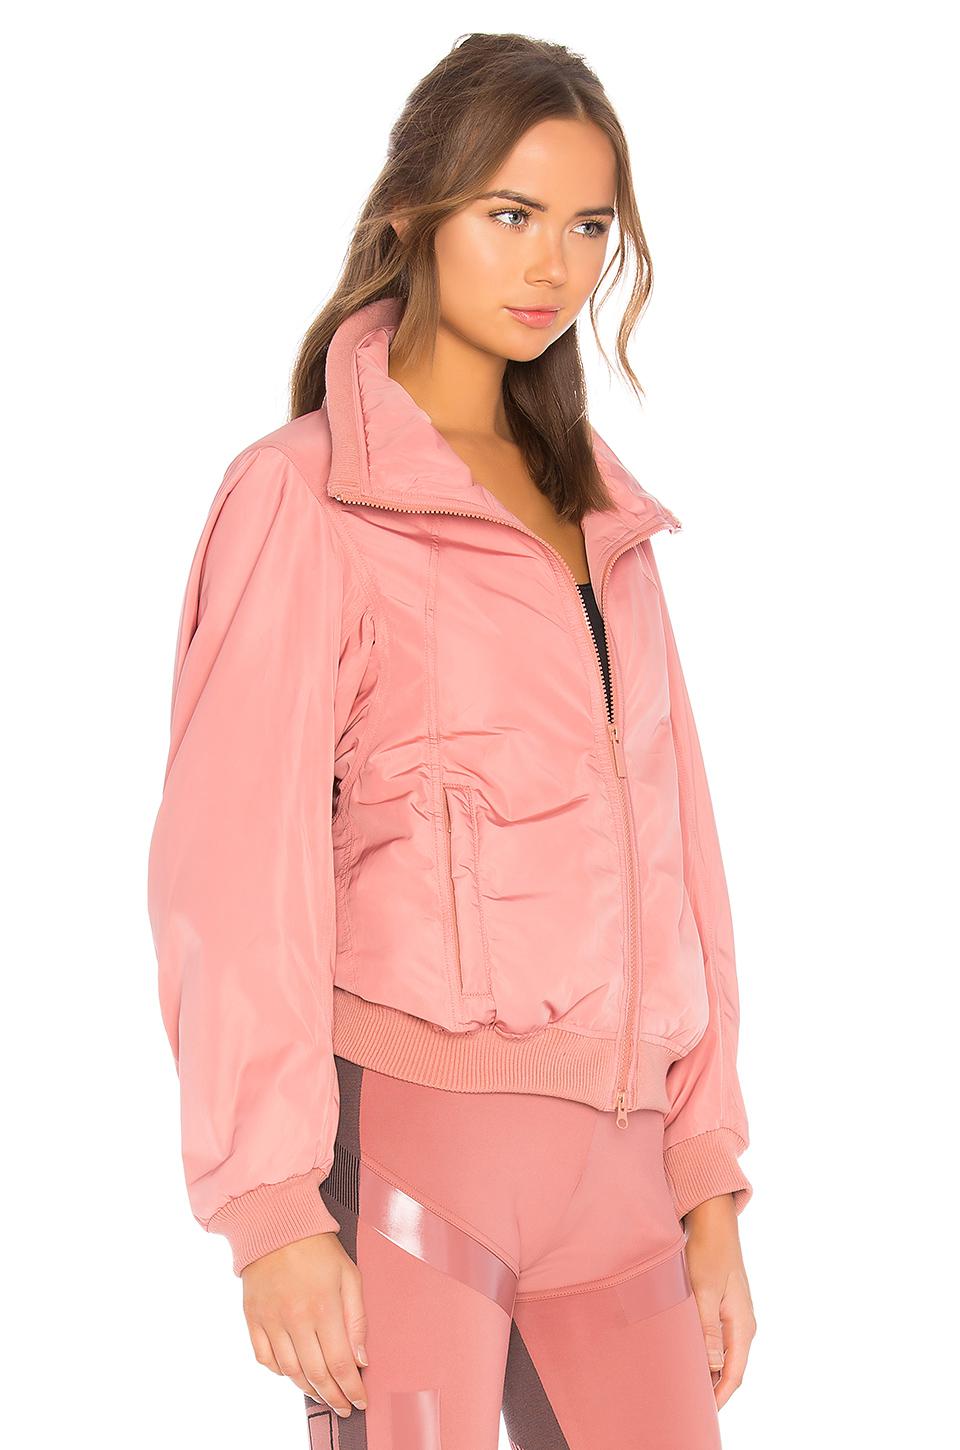 adidas stellasport rose jacket